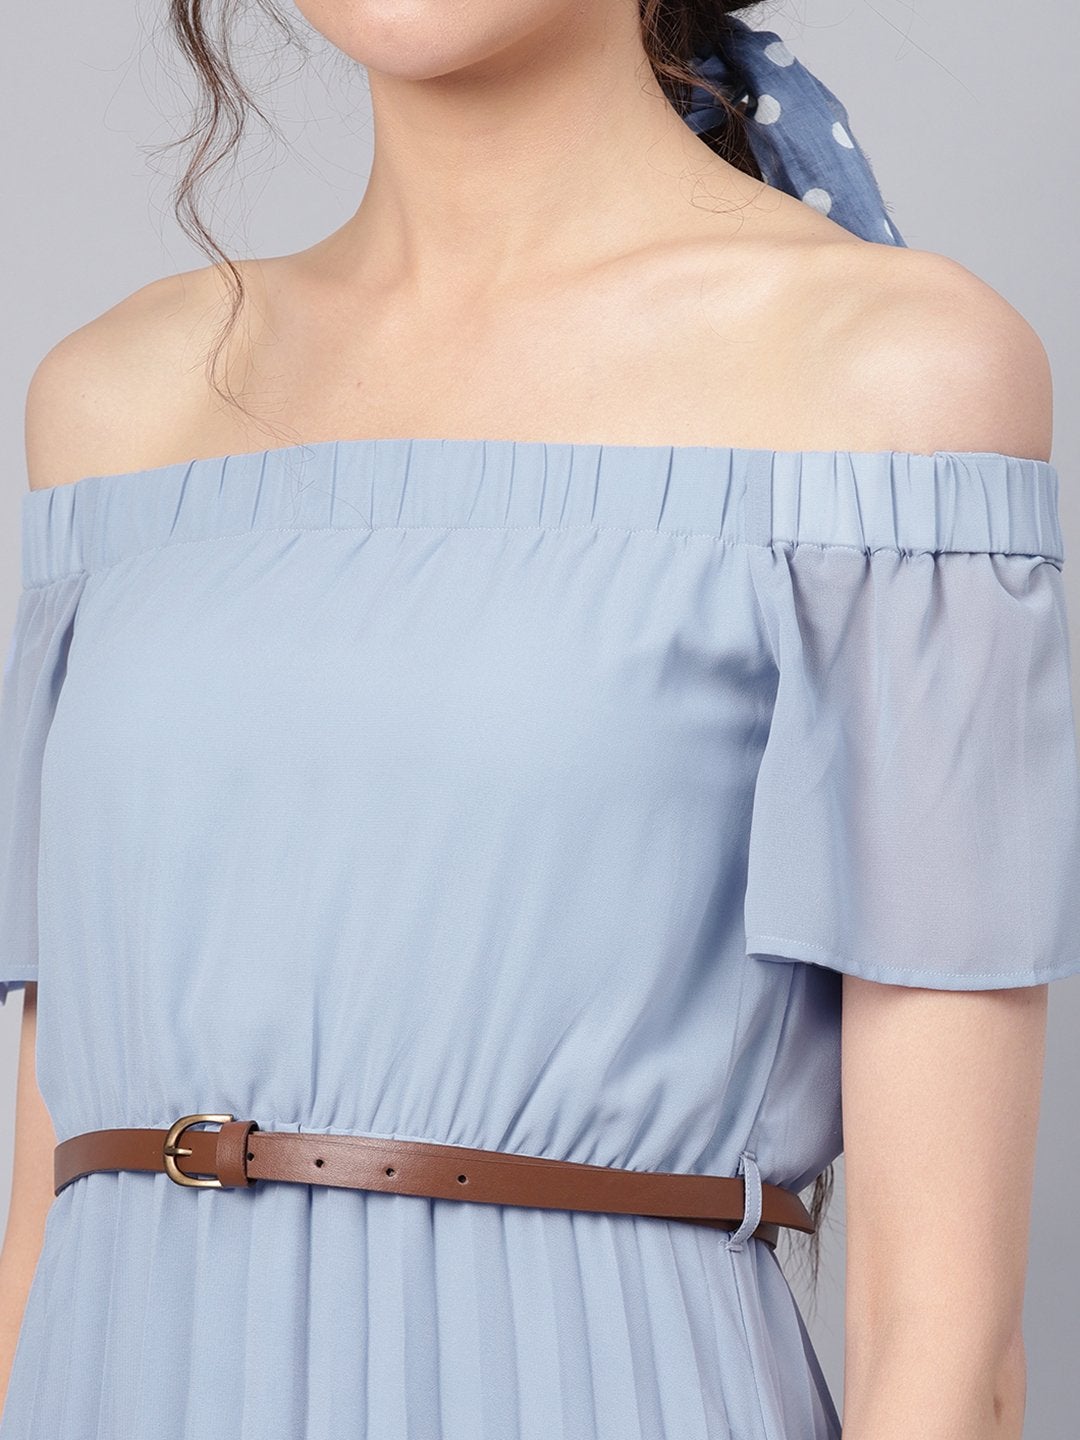 Women's Blue Off Shoulder High Low Belted Pleated Dress - SASSAFRAS